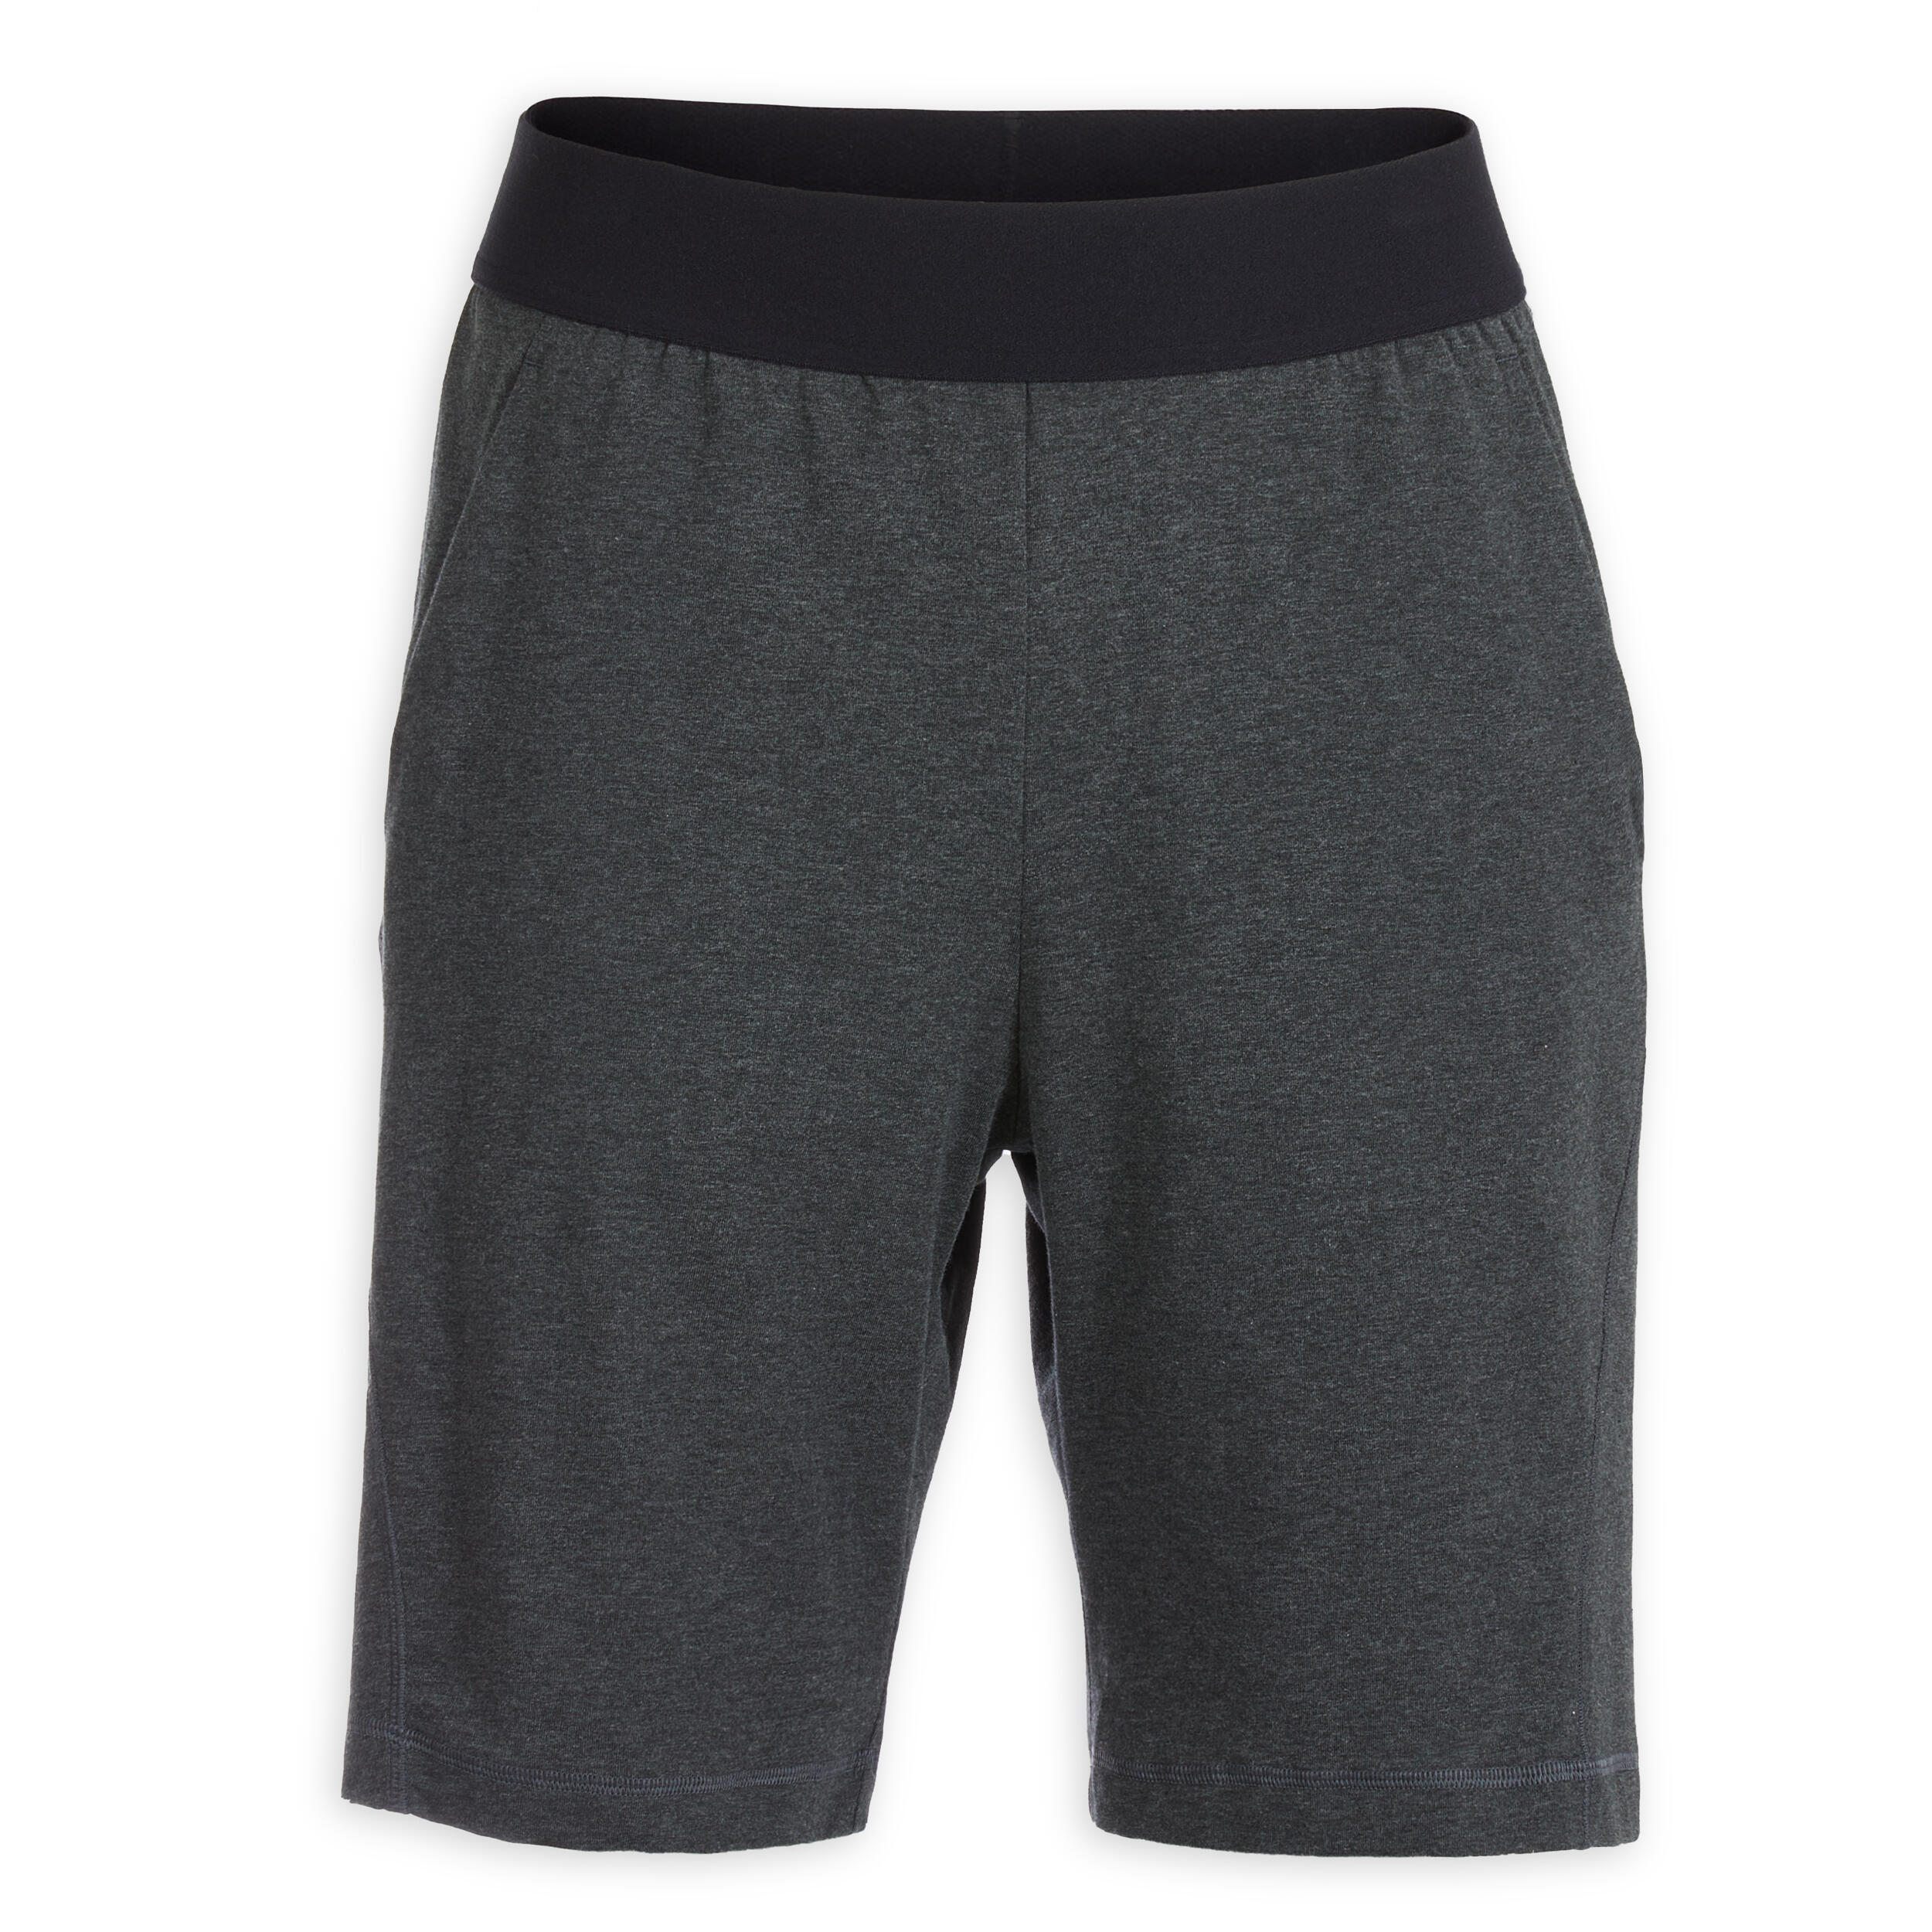 Men's Cotton Yoga Shorts Grey 5/6